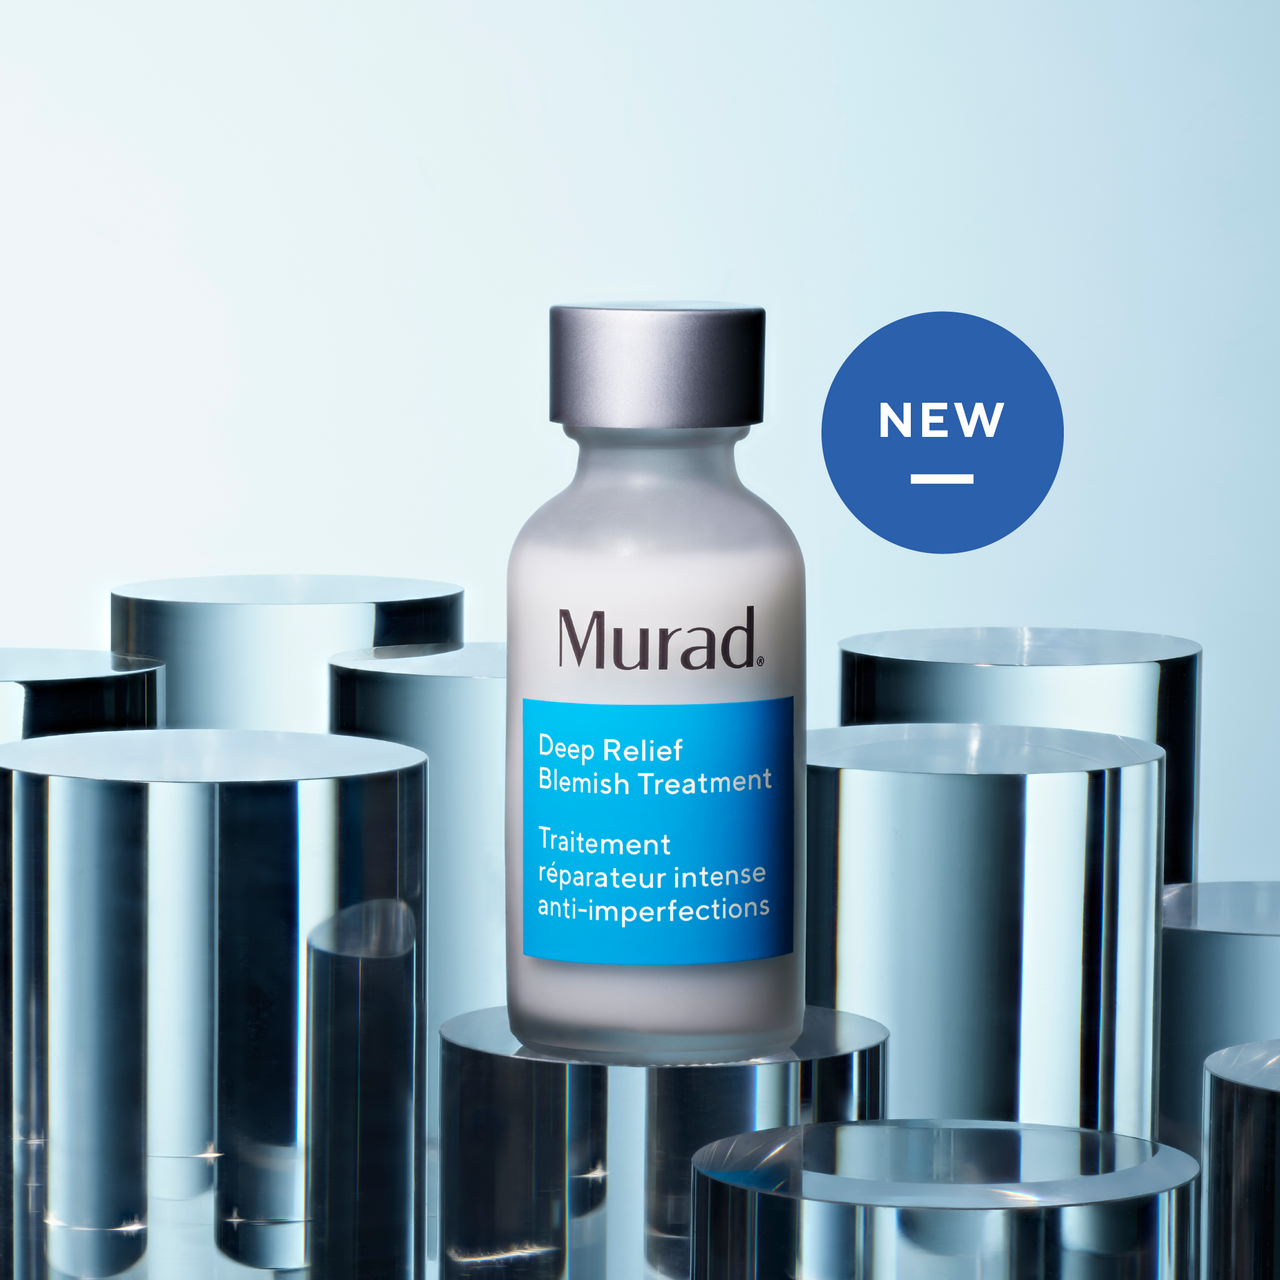 Murad Skincare Clinical Skin Care Company Murad Nz